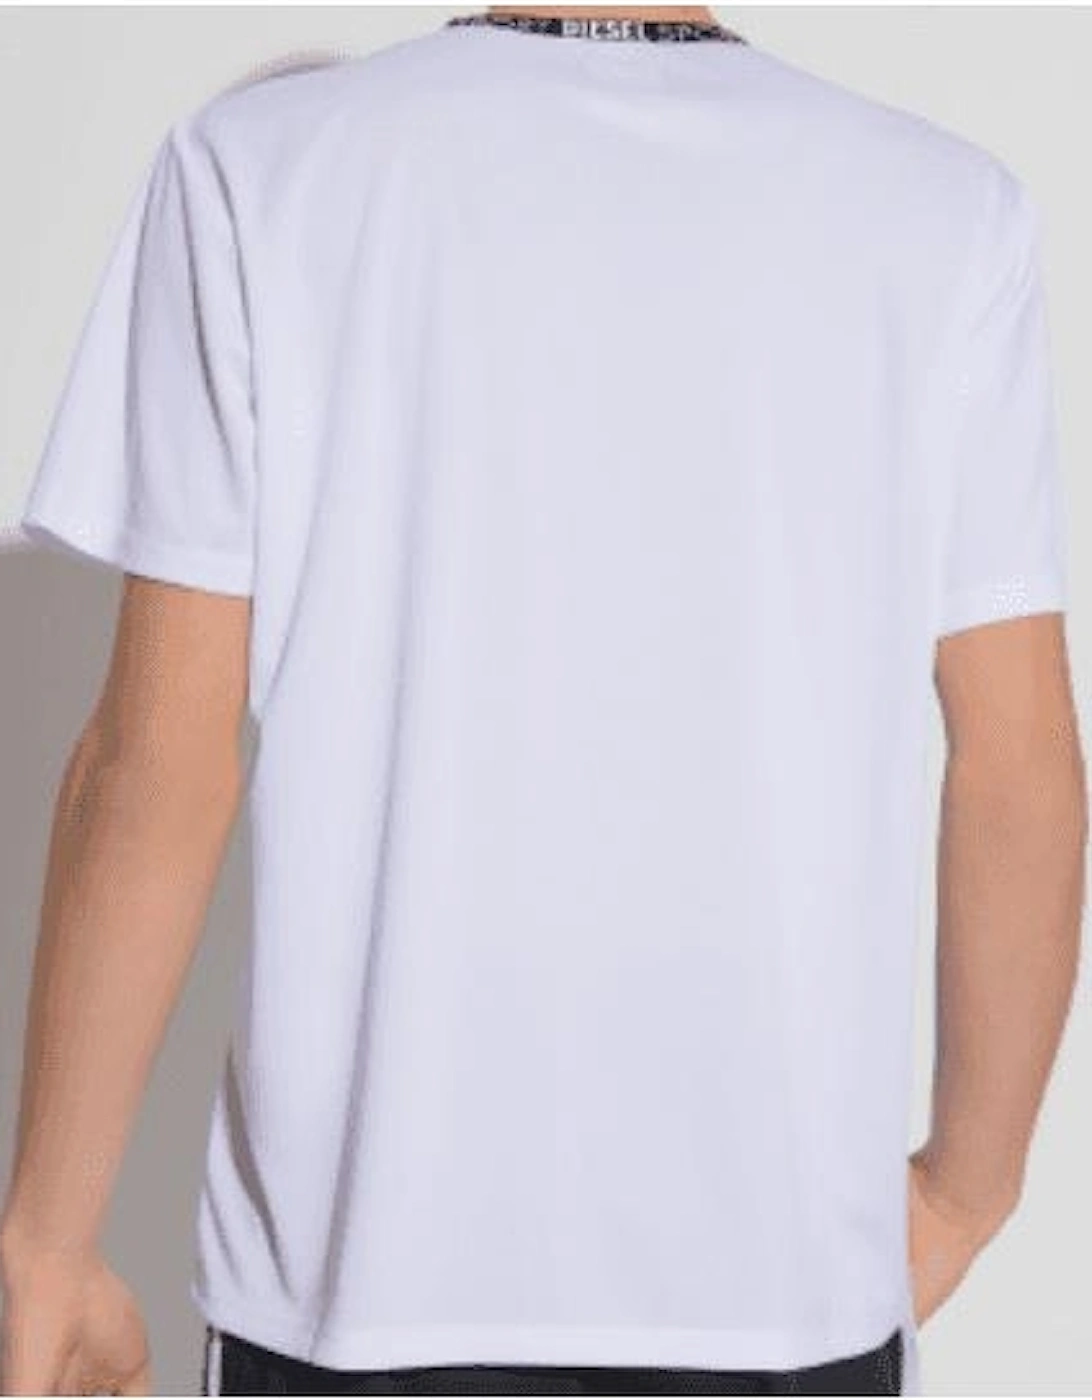 Amtee Sports Breathable White Cotton T-Shirt